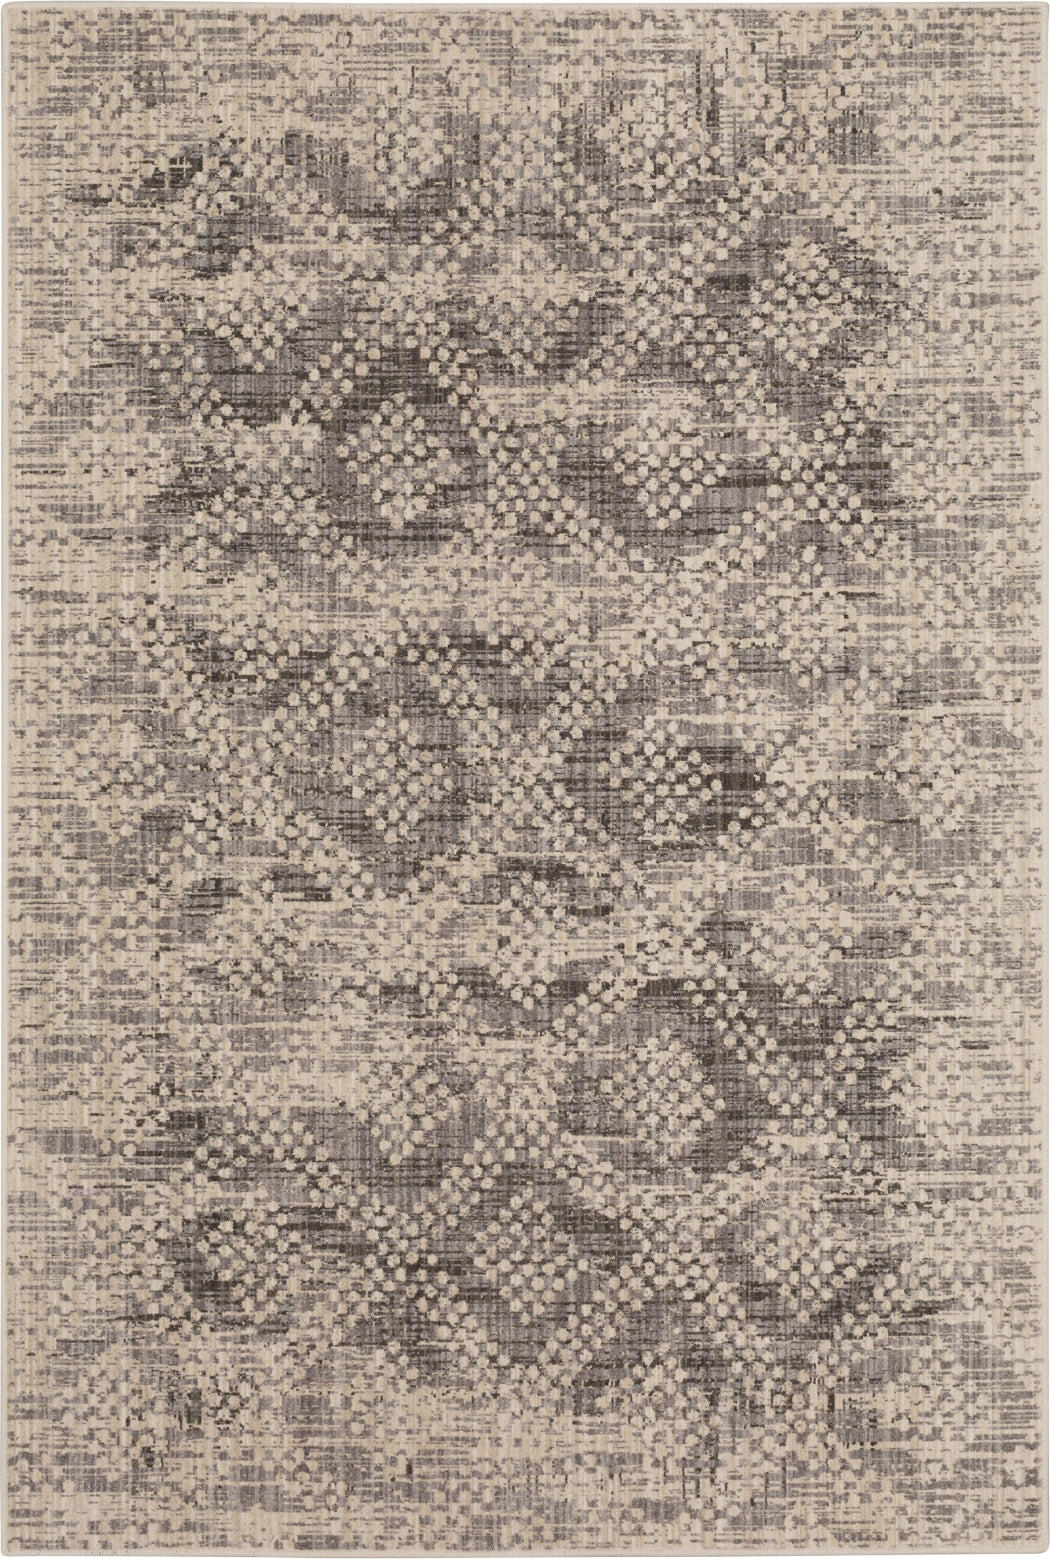 Karastan Axiom Inkle Dove Area Rug Main Image 5'3''x7'10'' Size 